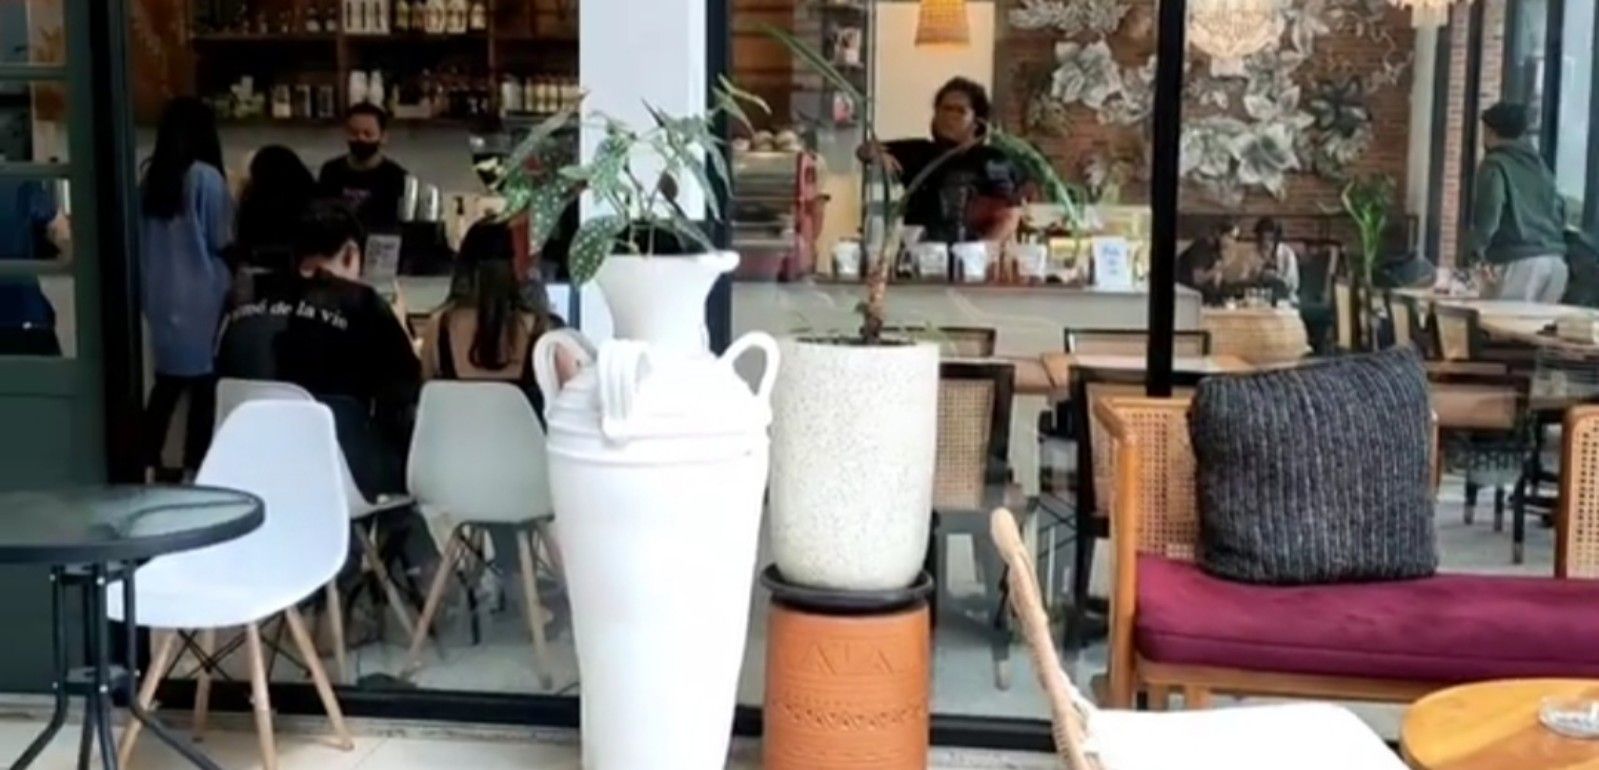 Ayoola Coffee, resto dan cafe cozy Instagramable di Bintaro tangerang Selatan Banten/tangkapan layar youtube/Edivayunda Channel 